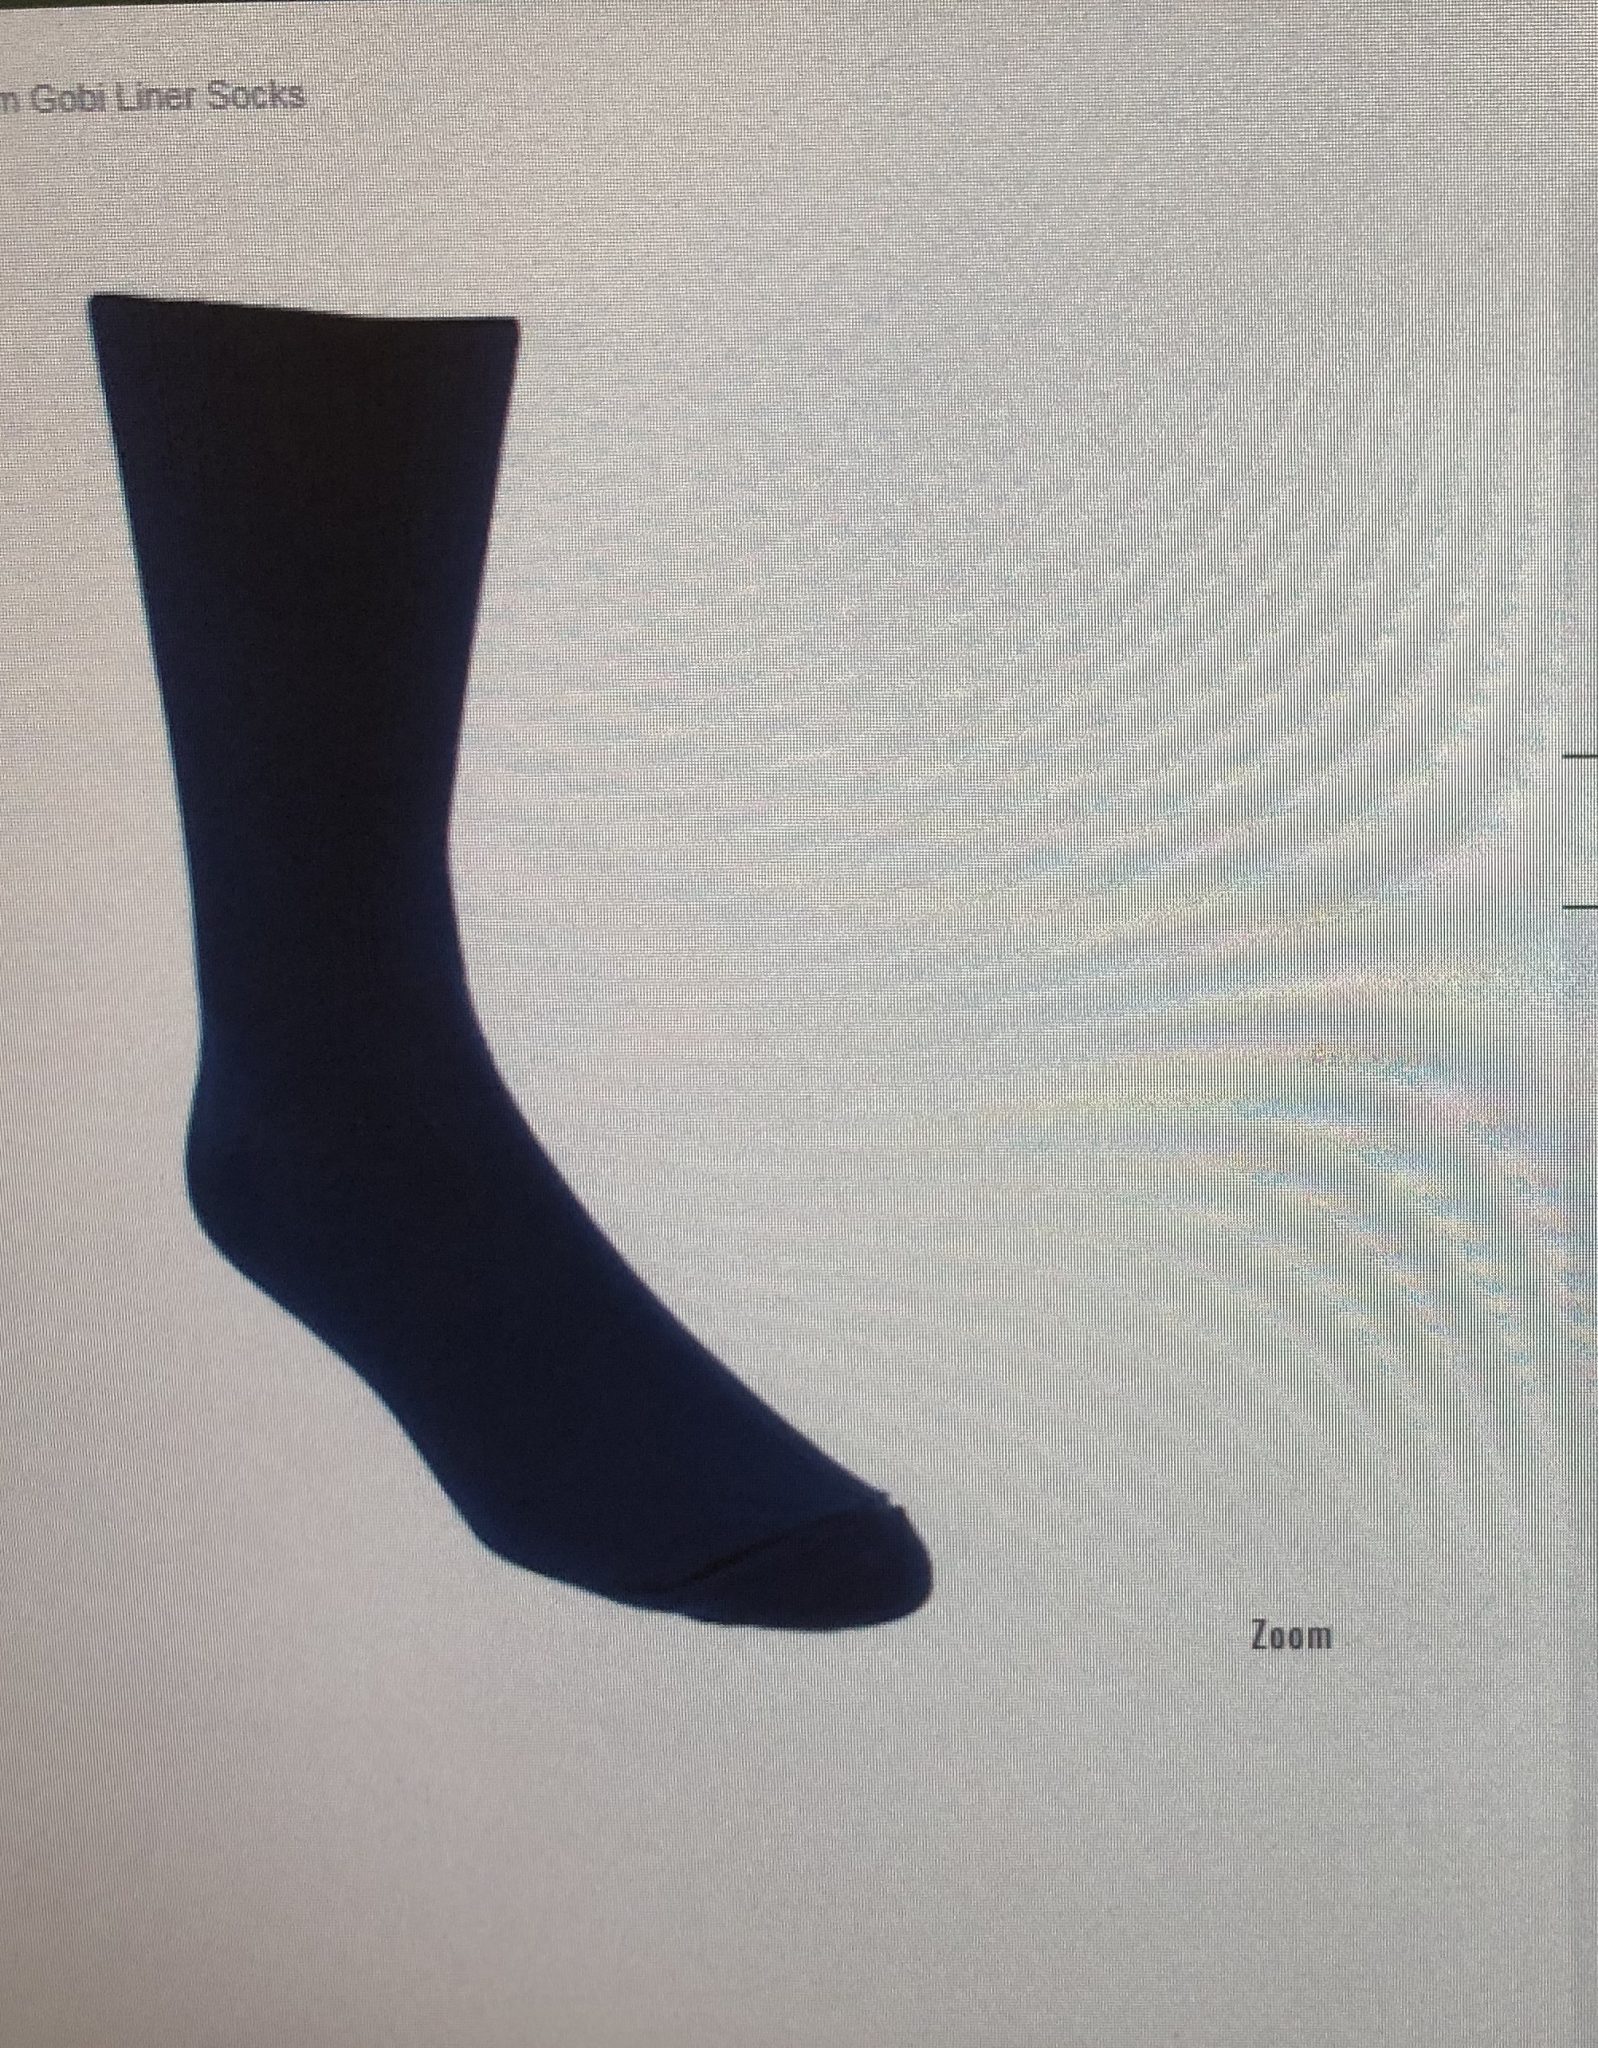 Wigwam Gobi Liner Socks X 4 pairs